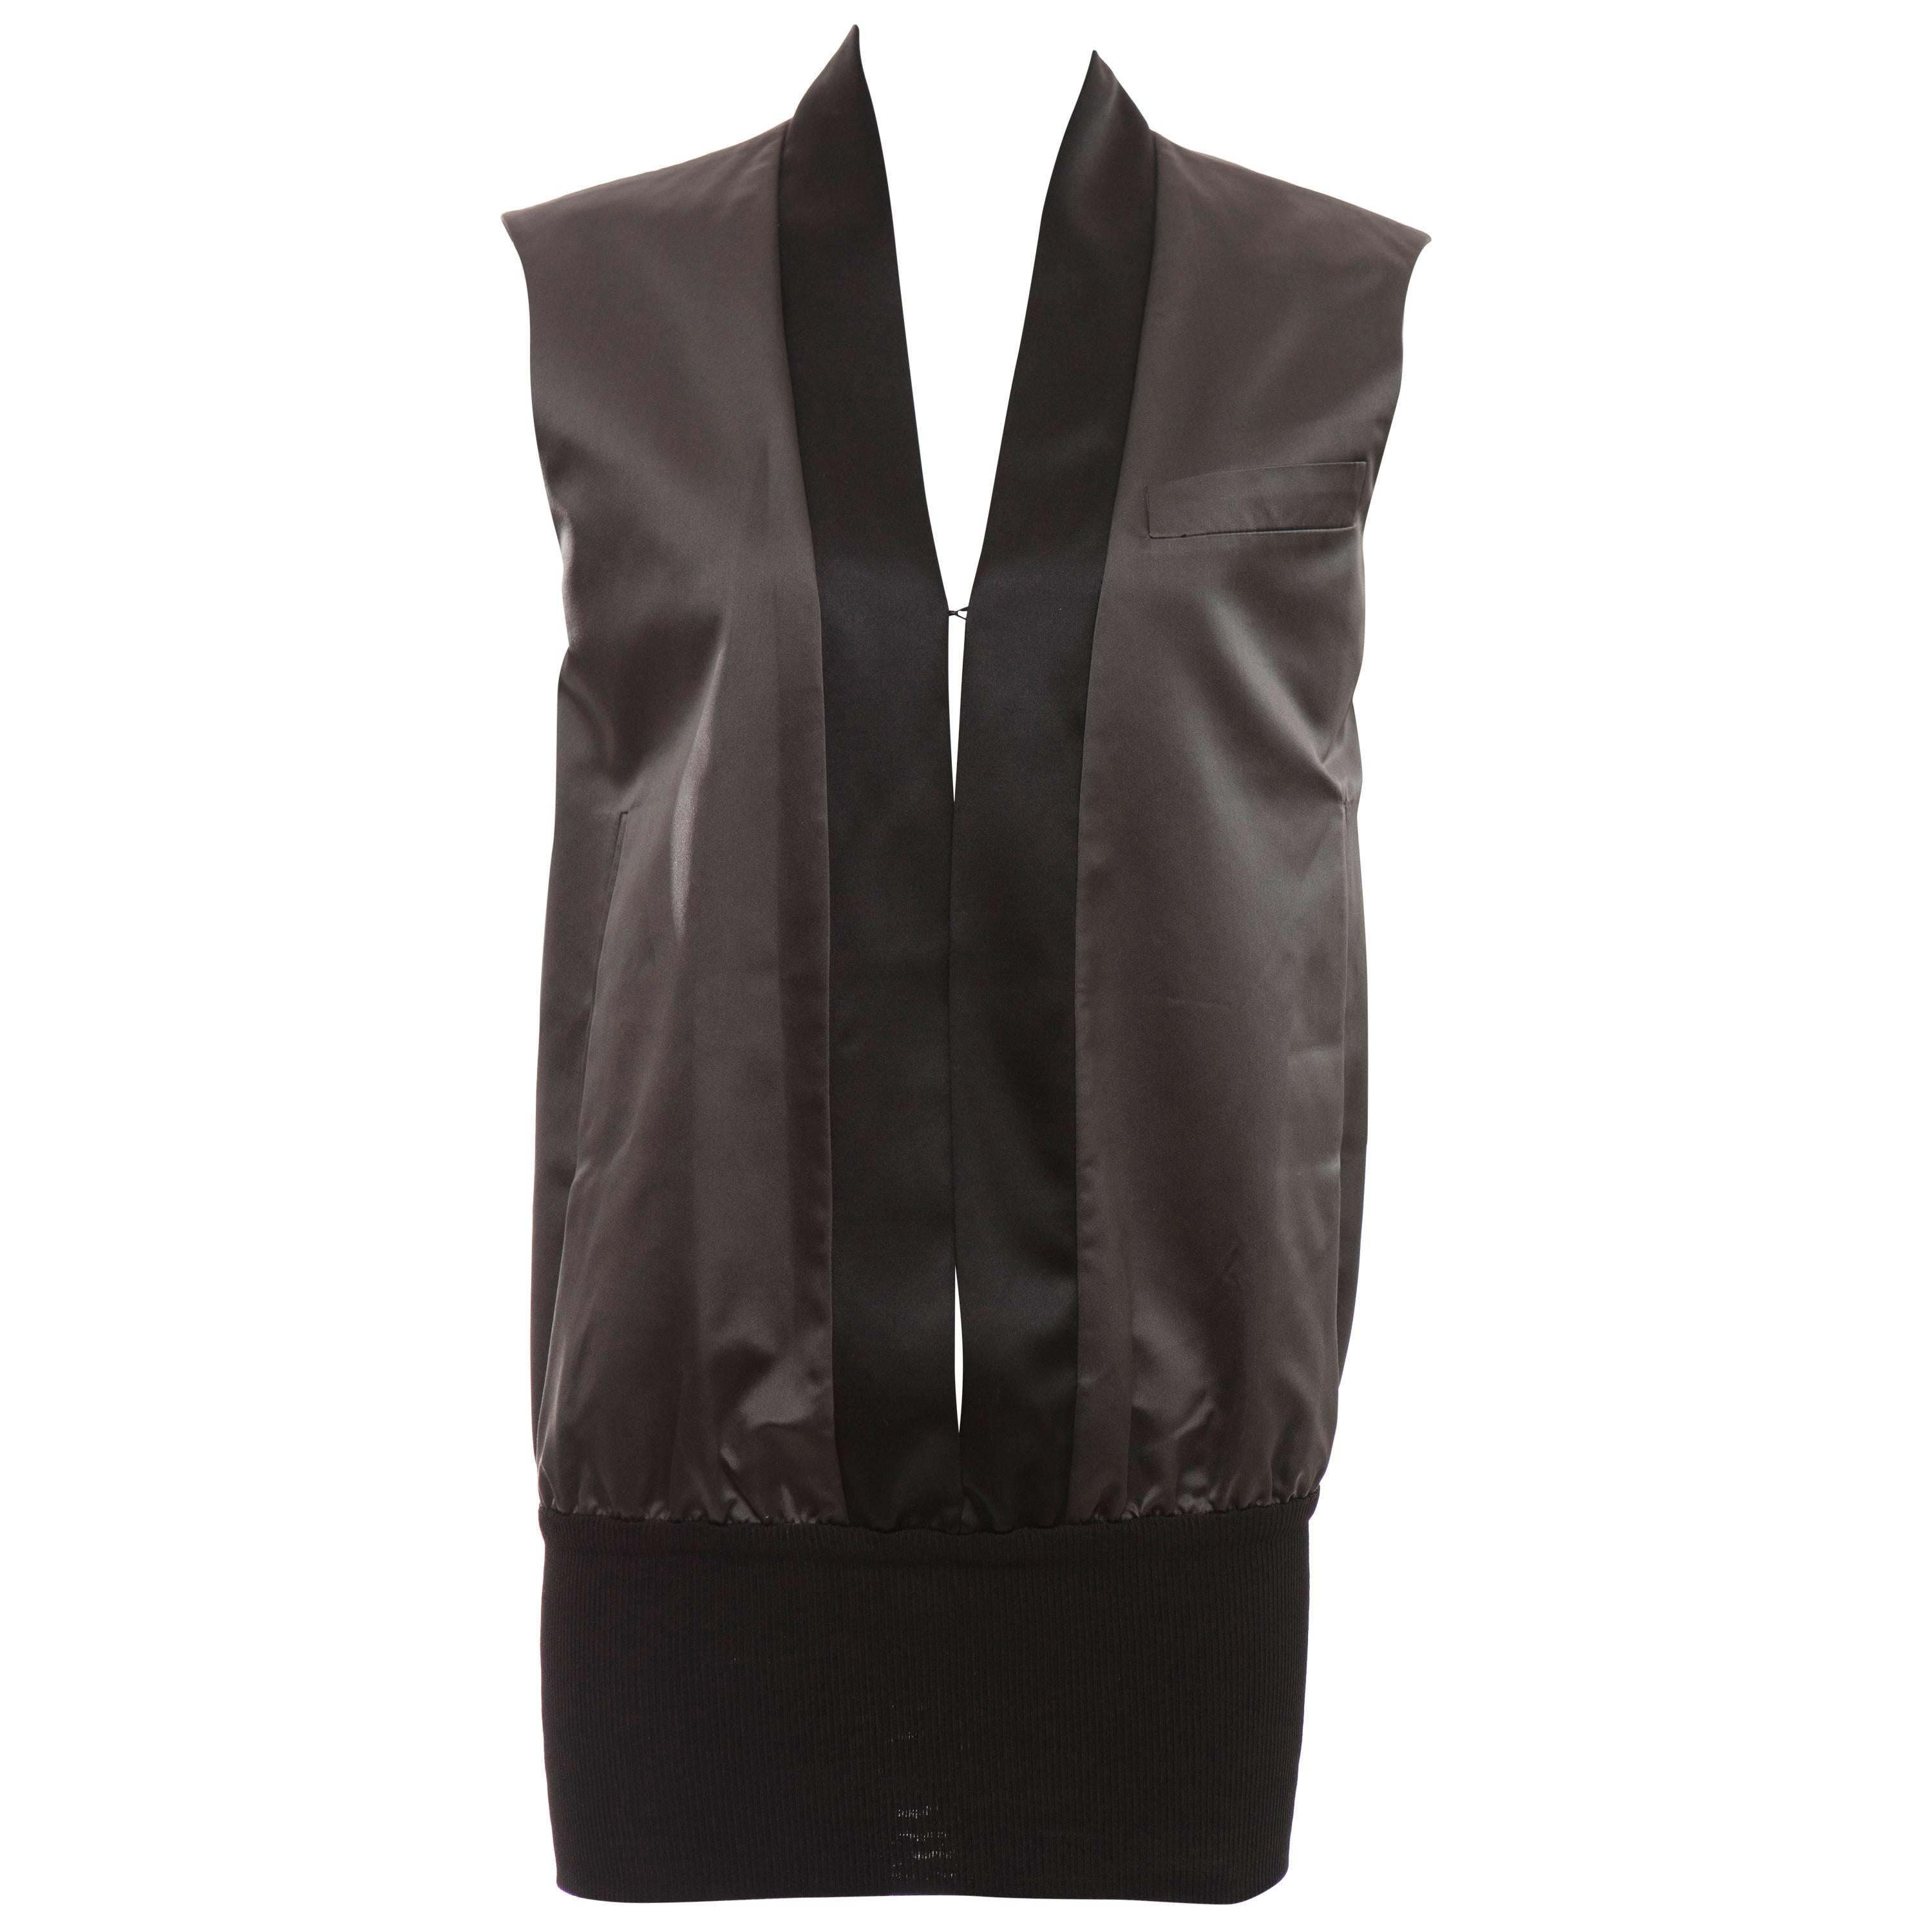 John Bartlett Charcoal Grey Duchess Silk Satin Vest, Autumn - Winter 1999 For Sale